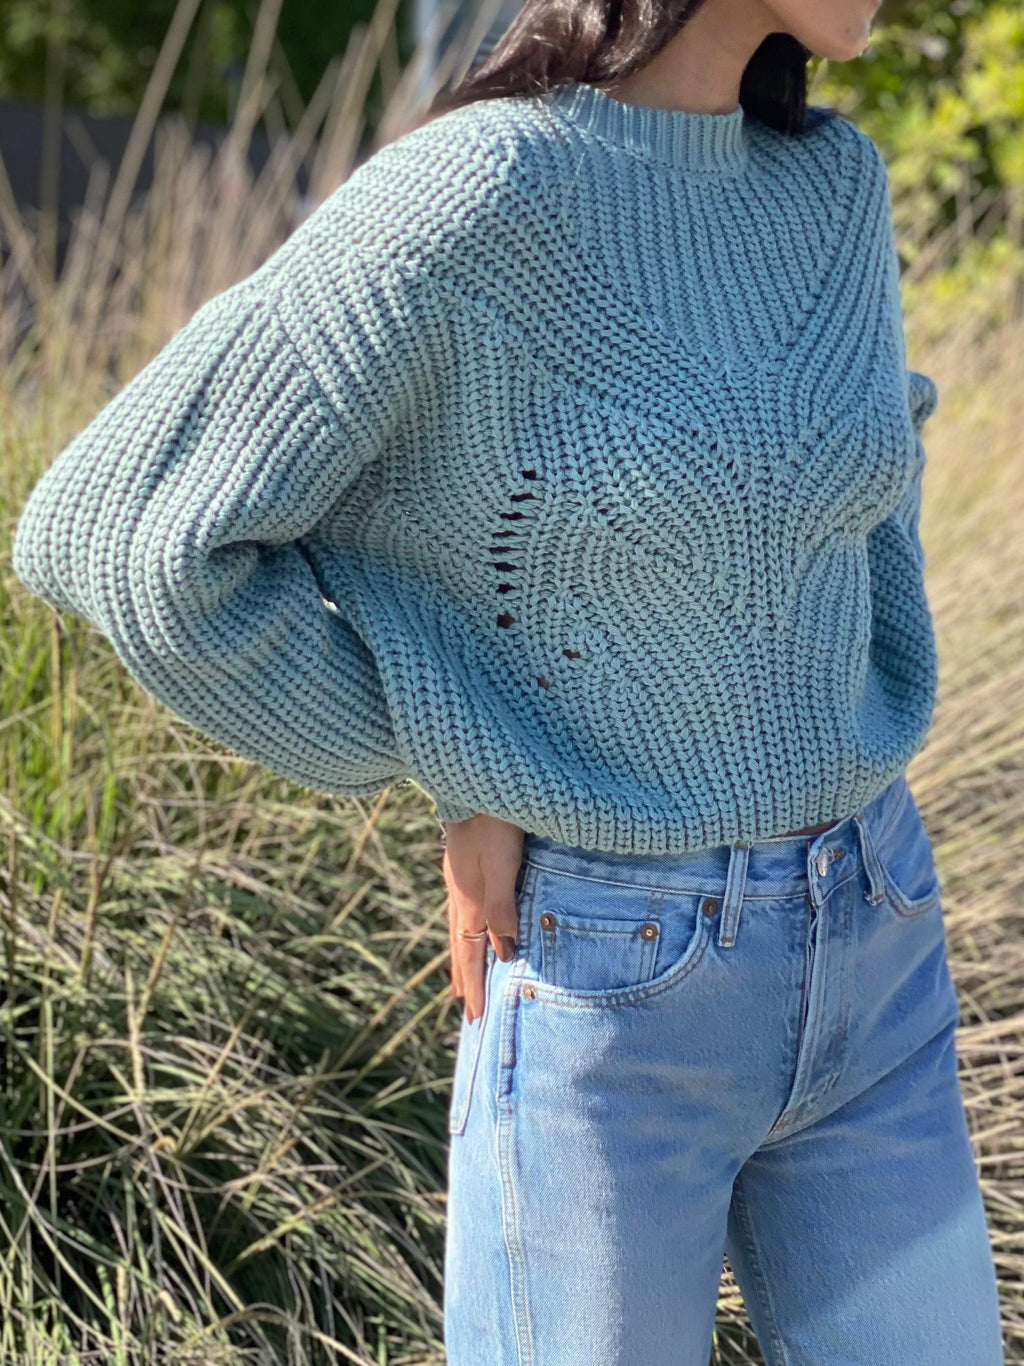 Ersa Crop Cotton Sweater - Stone – Pharaoh Collection